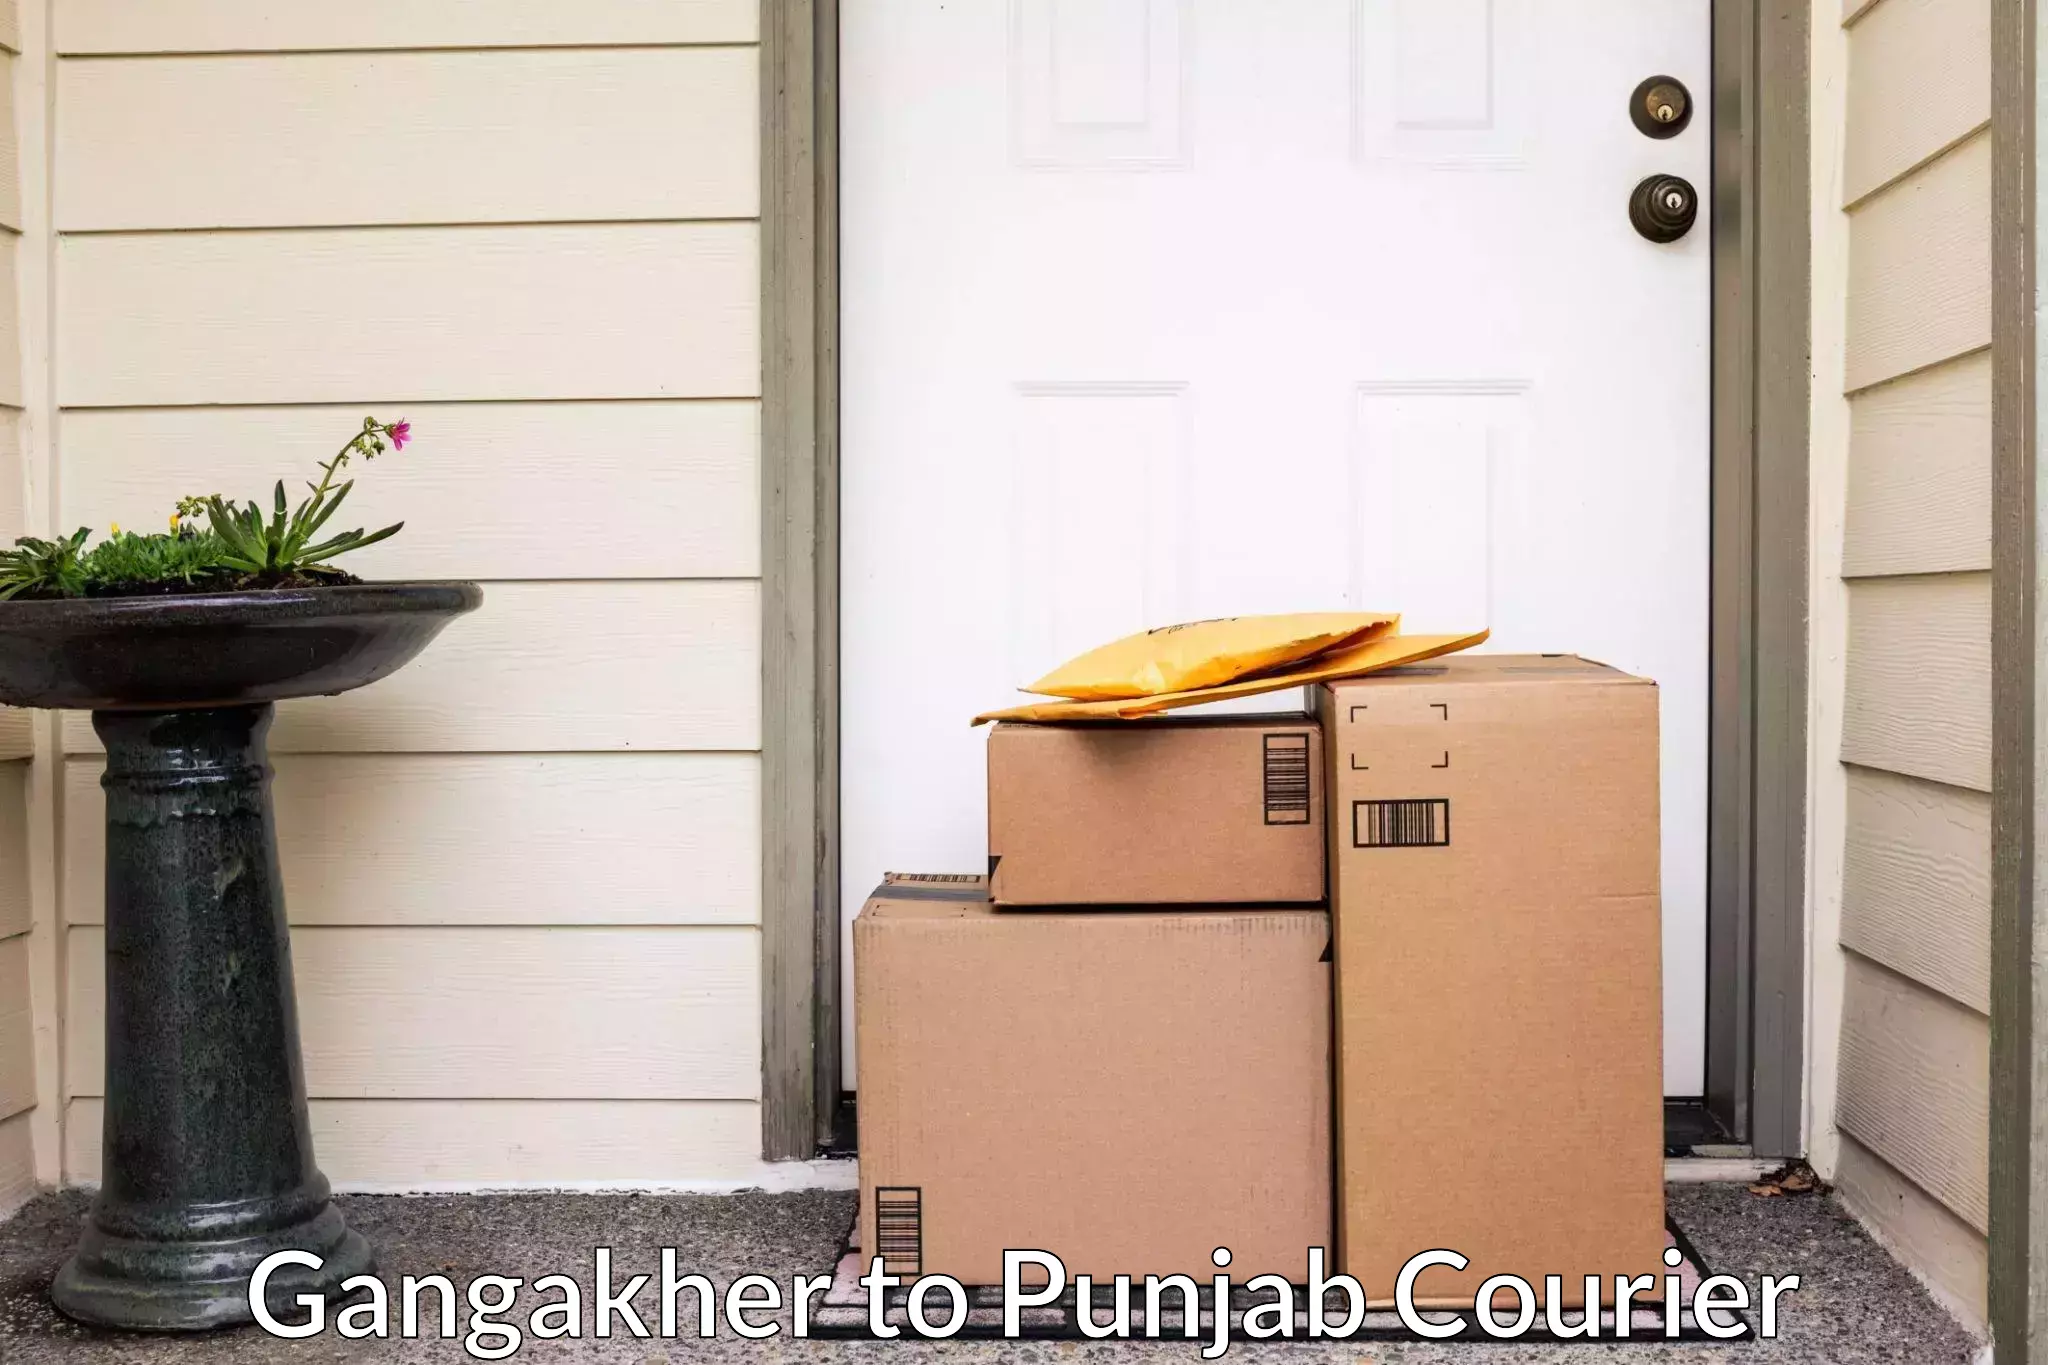 Residential moving experts Gangakher to Punjab